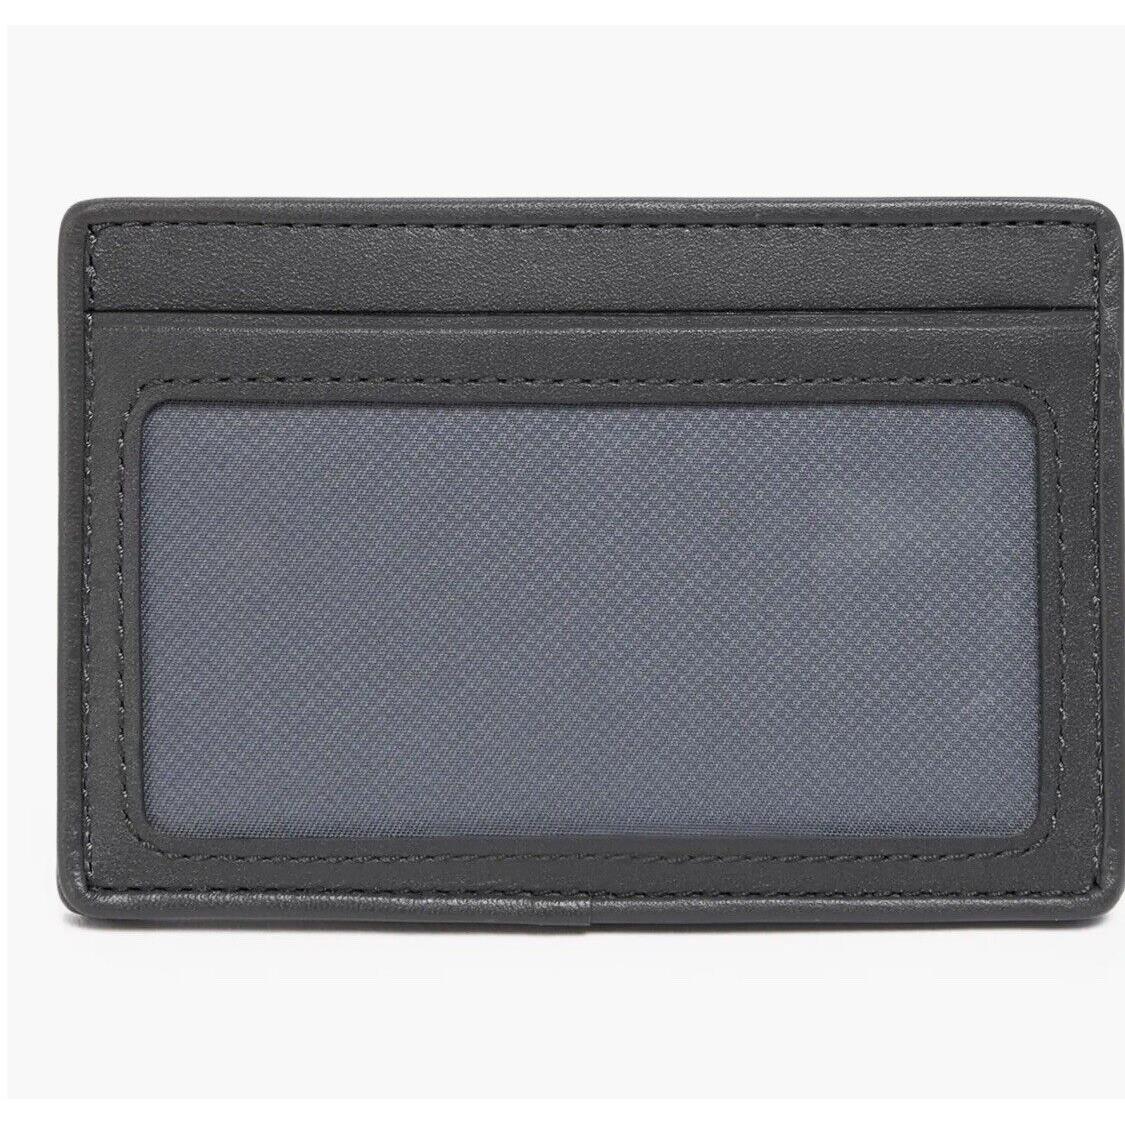 Tumi Alpha Slg Slim Card Case Navy Blue and Grey Leather Trim W/ ID Window